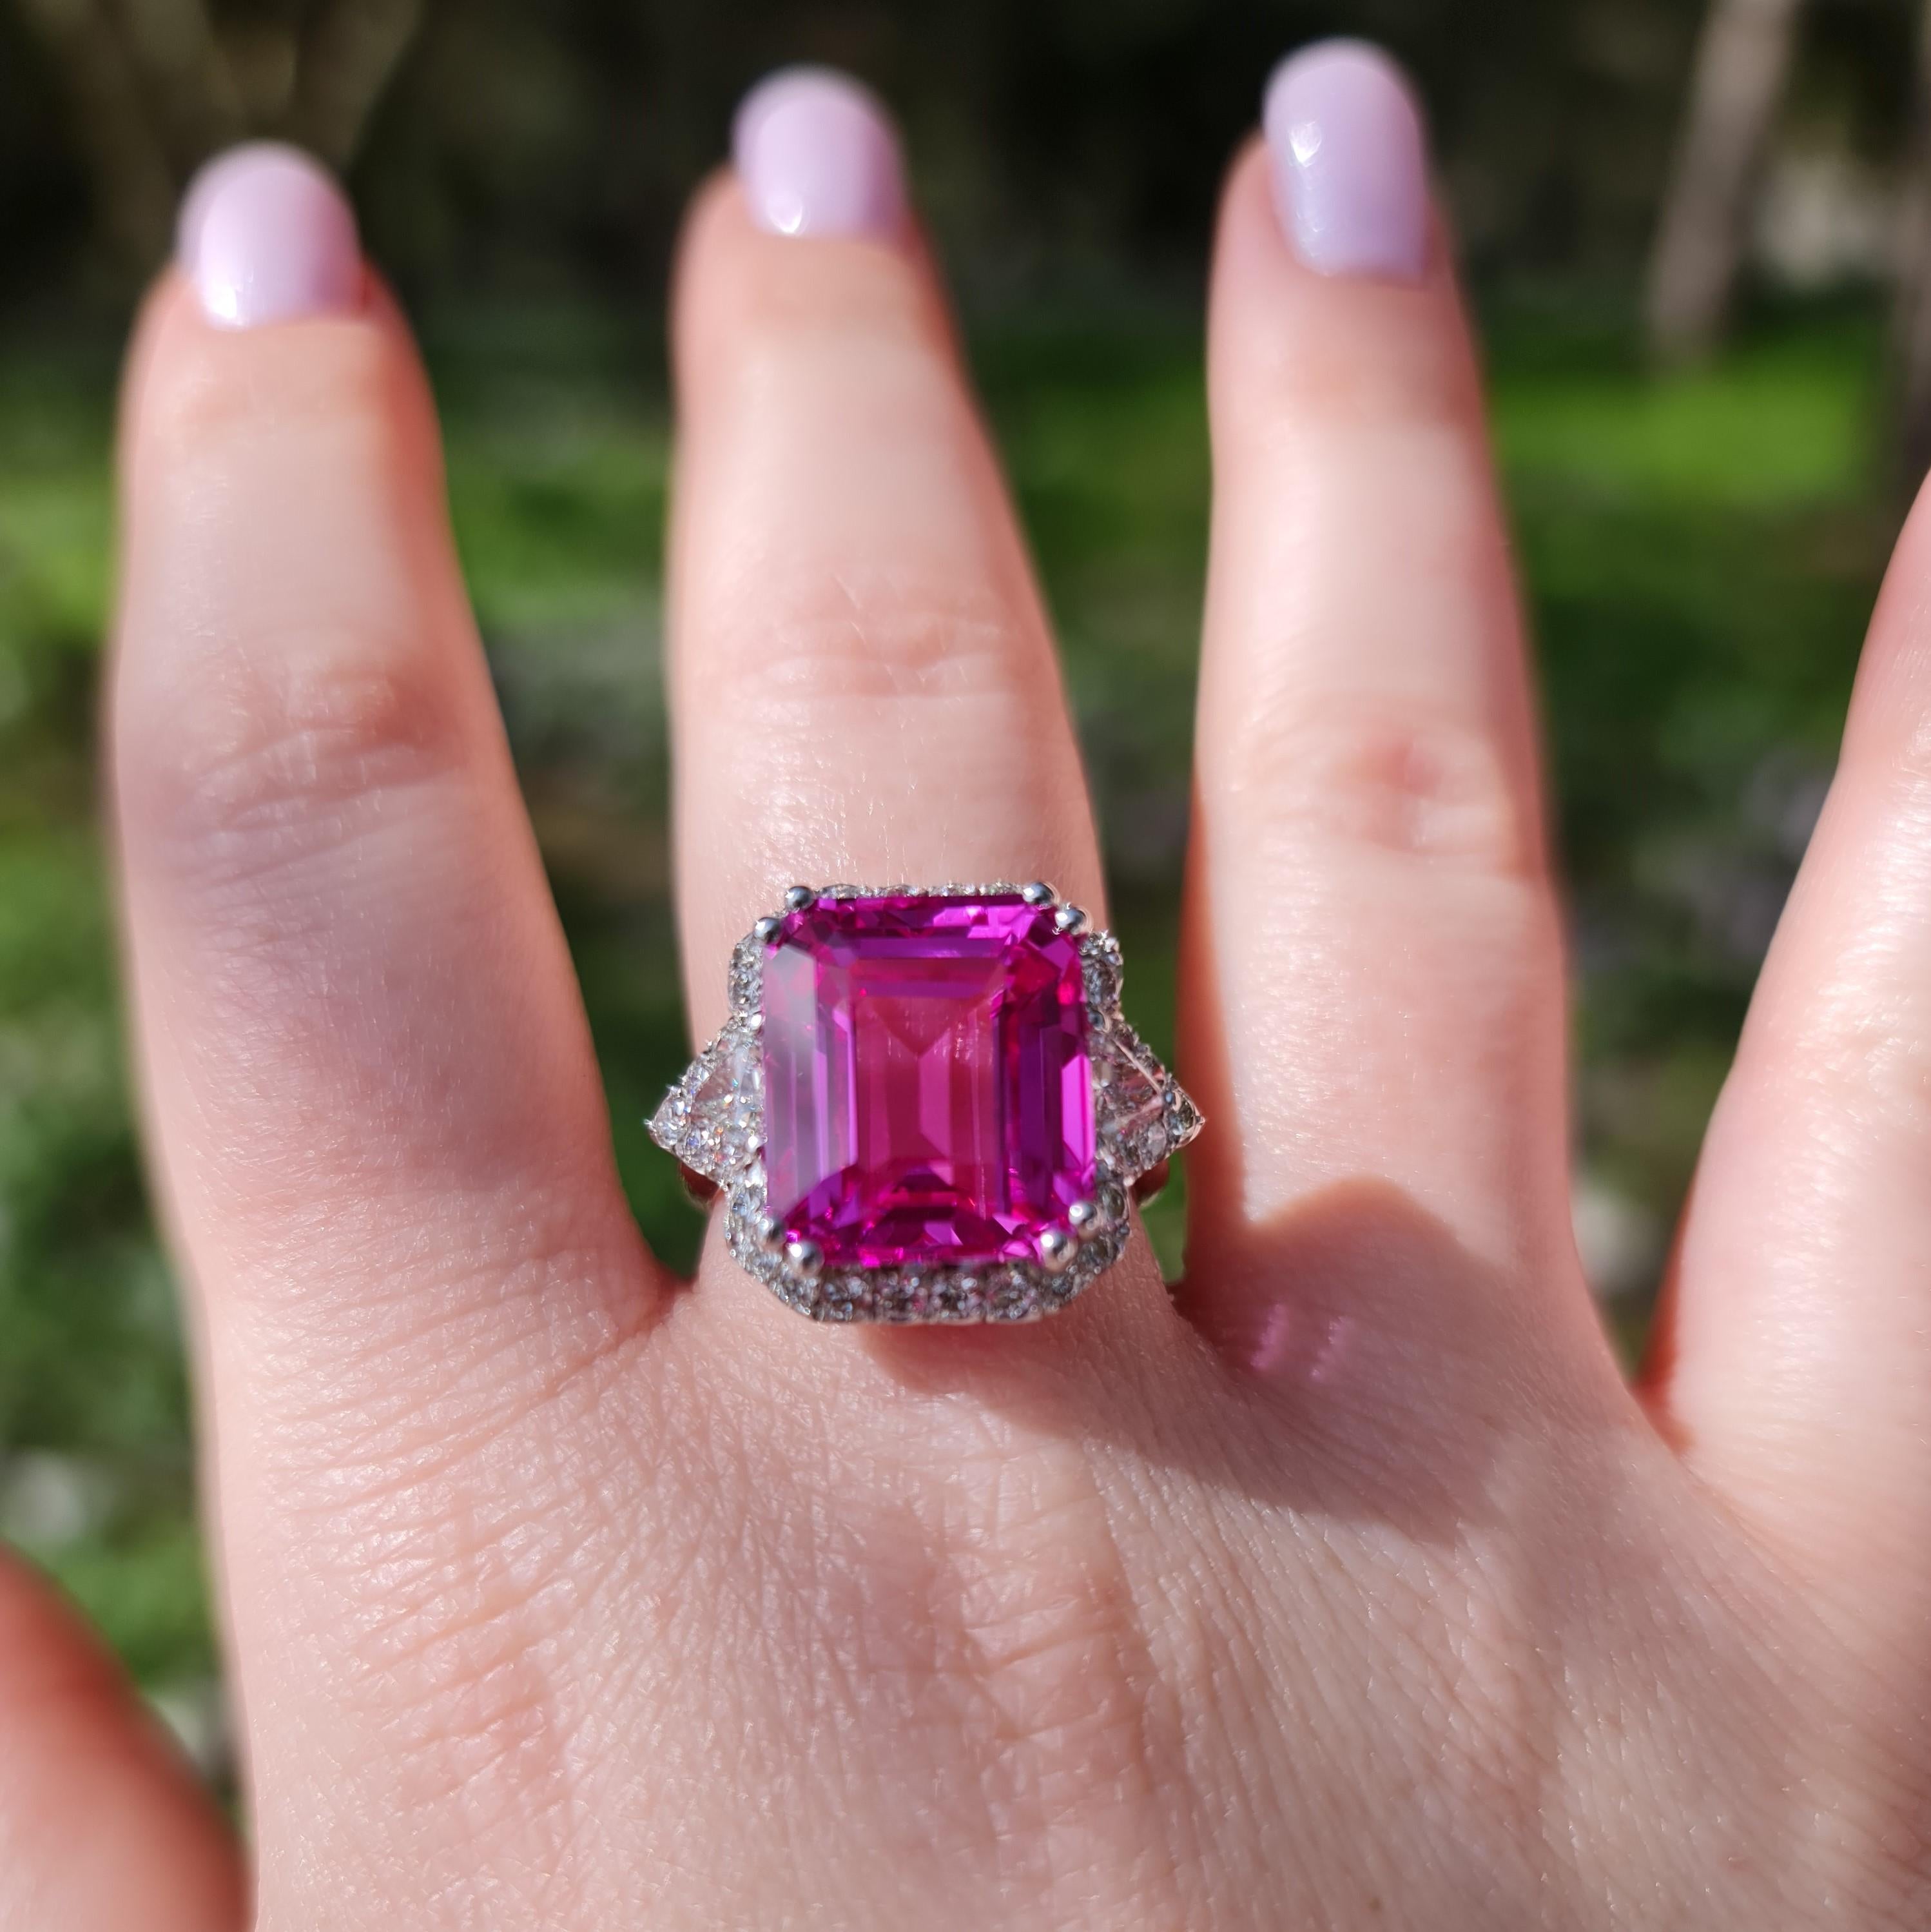 Emerald Cut 13.00 carat pink sapphire ring 1.20 carat natural diamonds statement ring For Sale